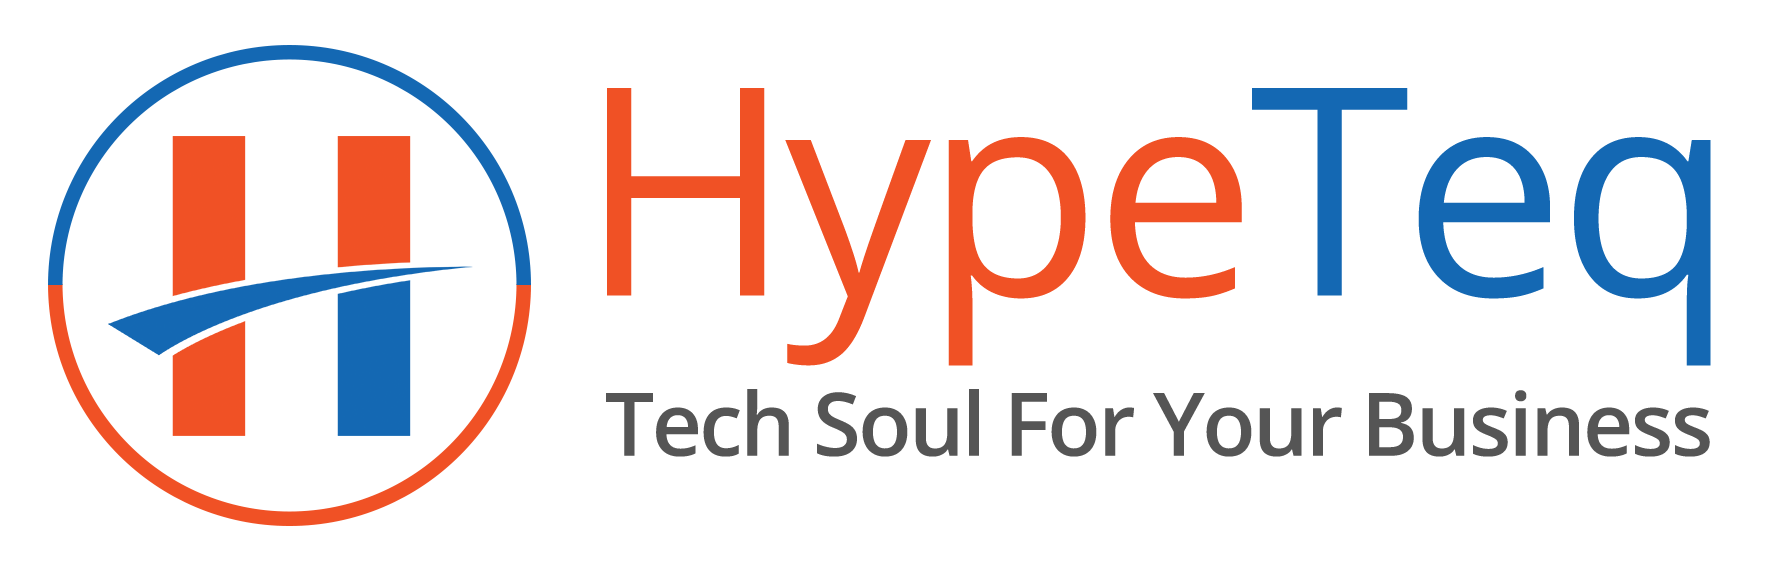 Hypeteq-Software-logo